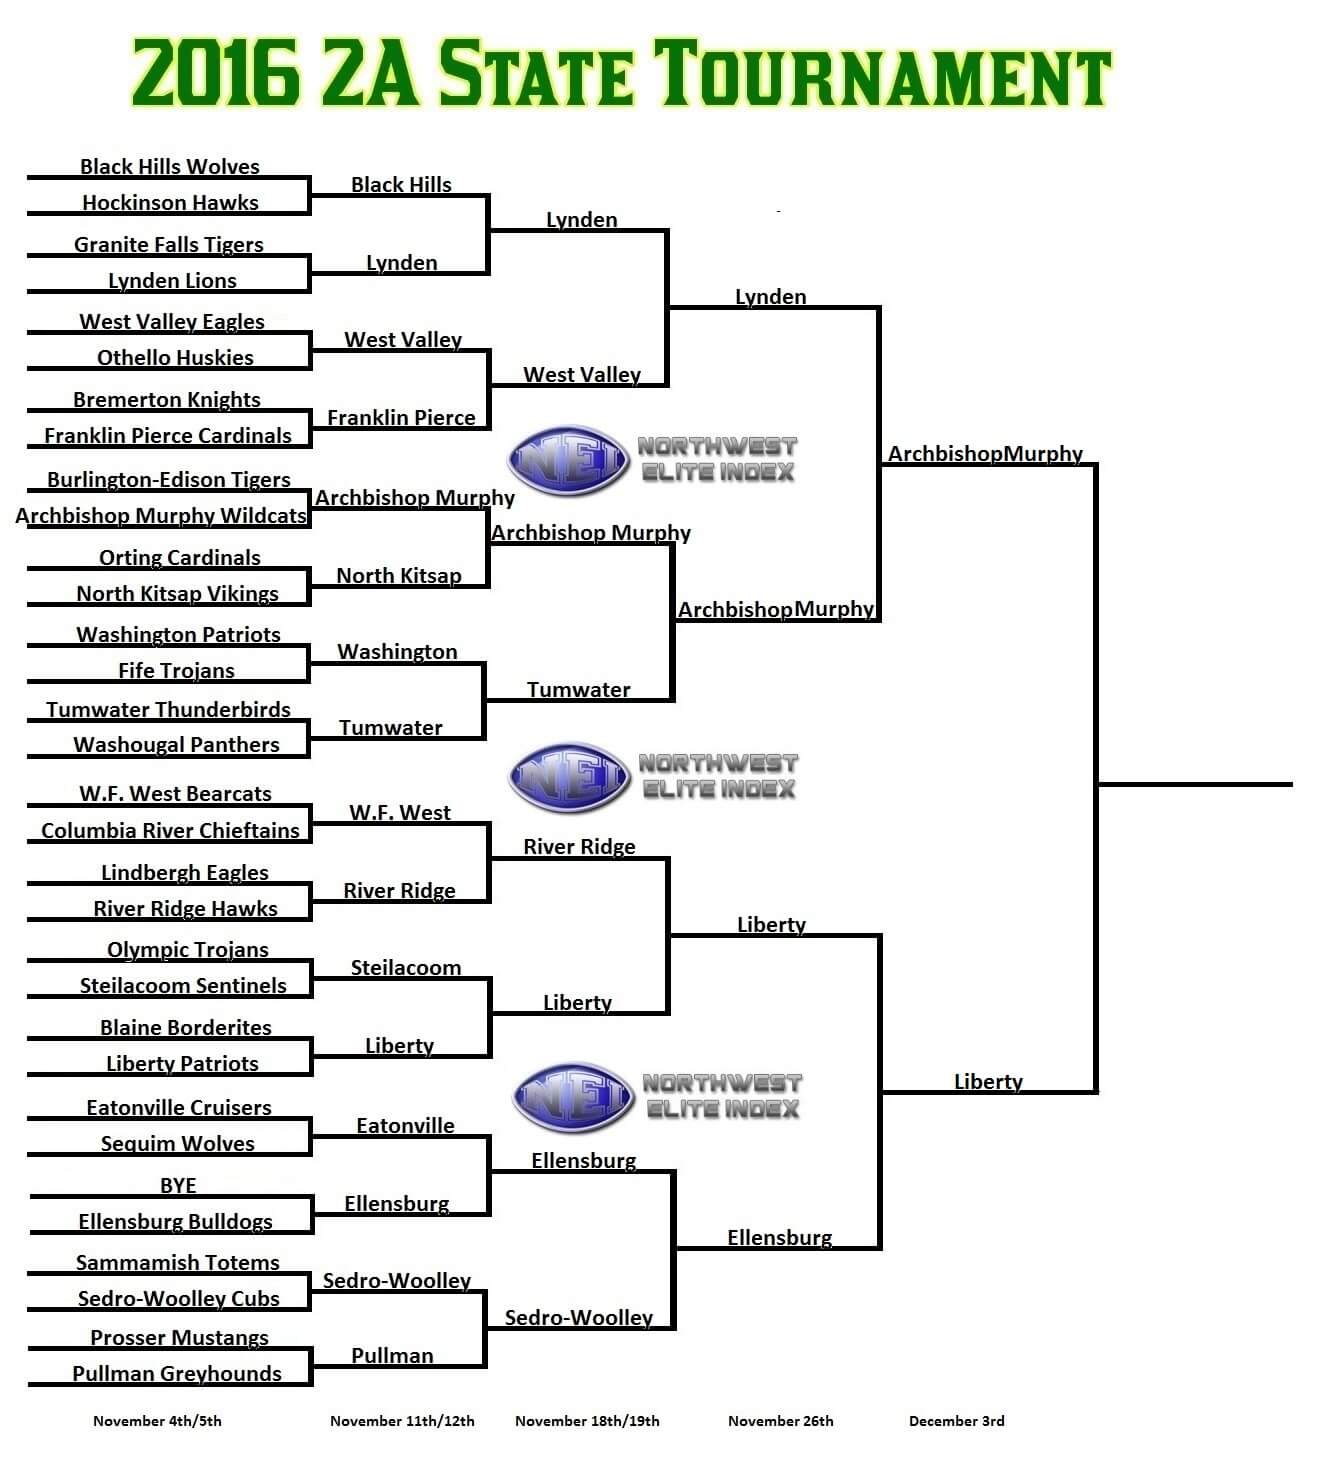 2016 2A State Tournament 1126